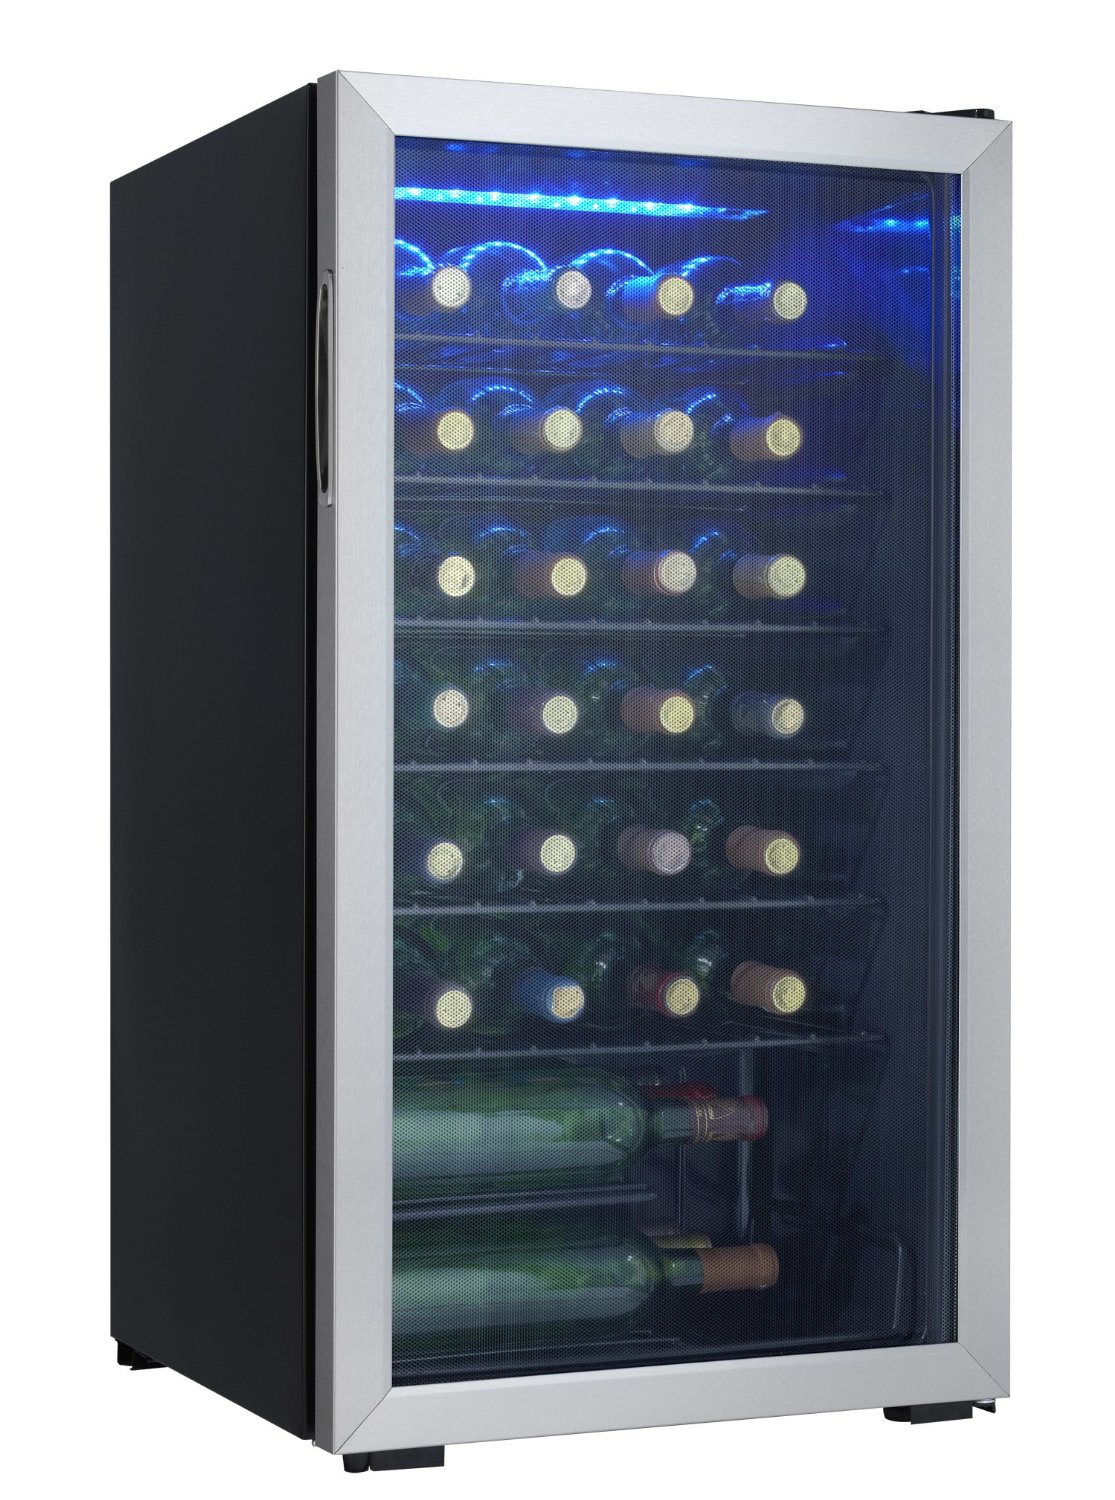 Danby DWC93BLSDB 36 Bottle Freestanding Wine Cooler